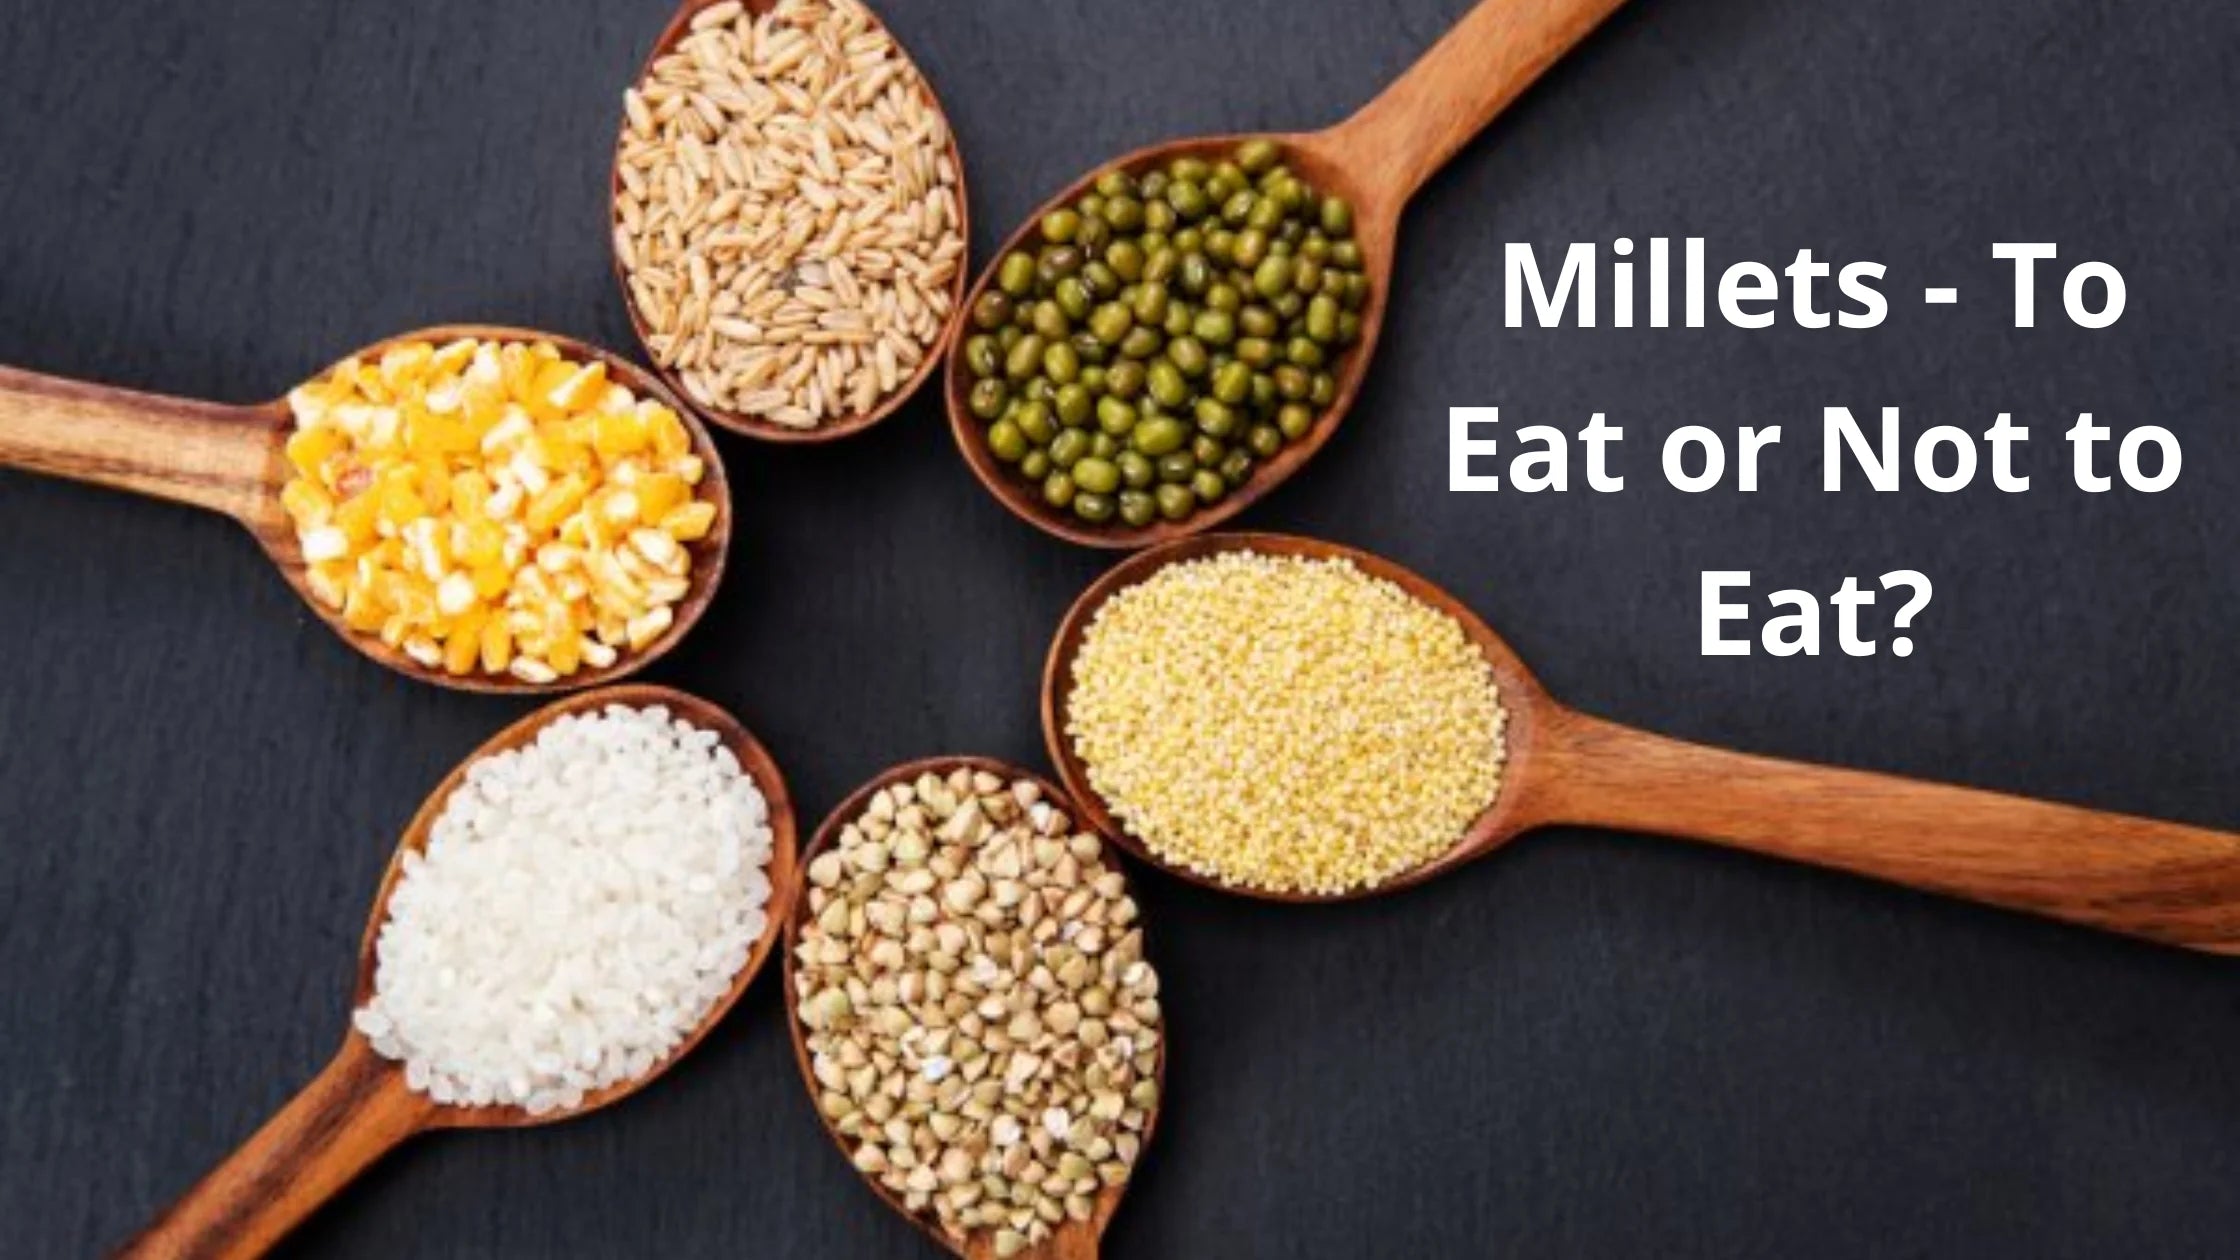 Who should not eat millet?